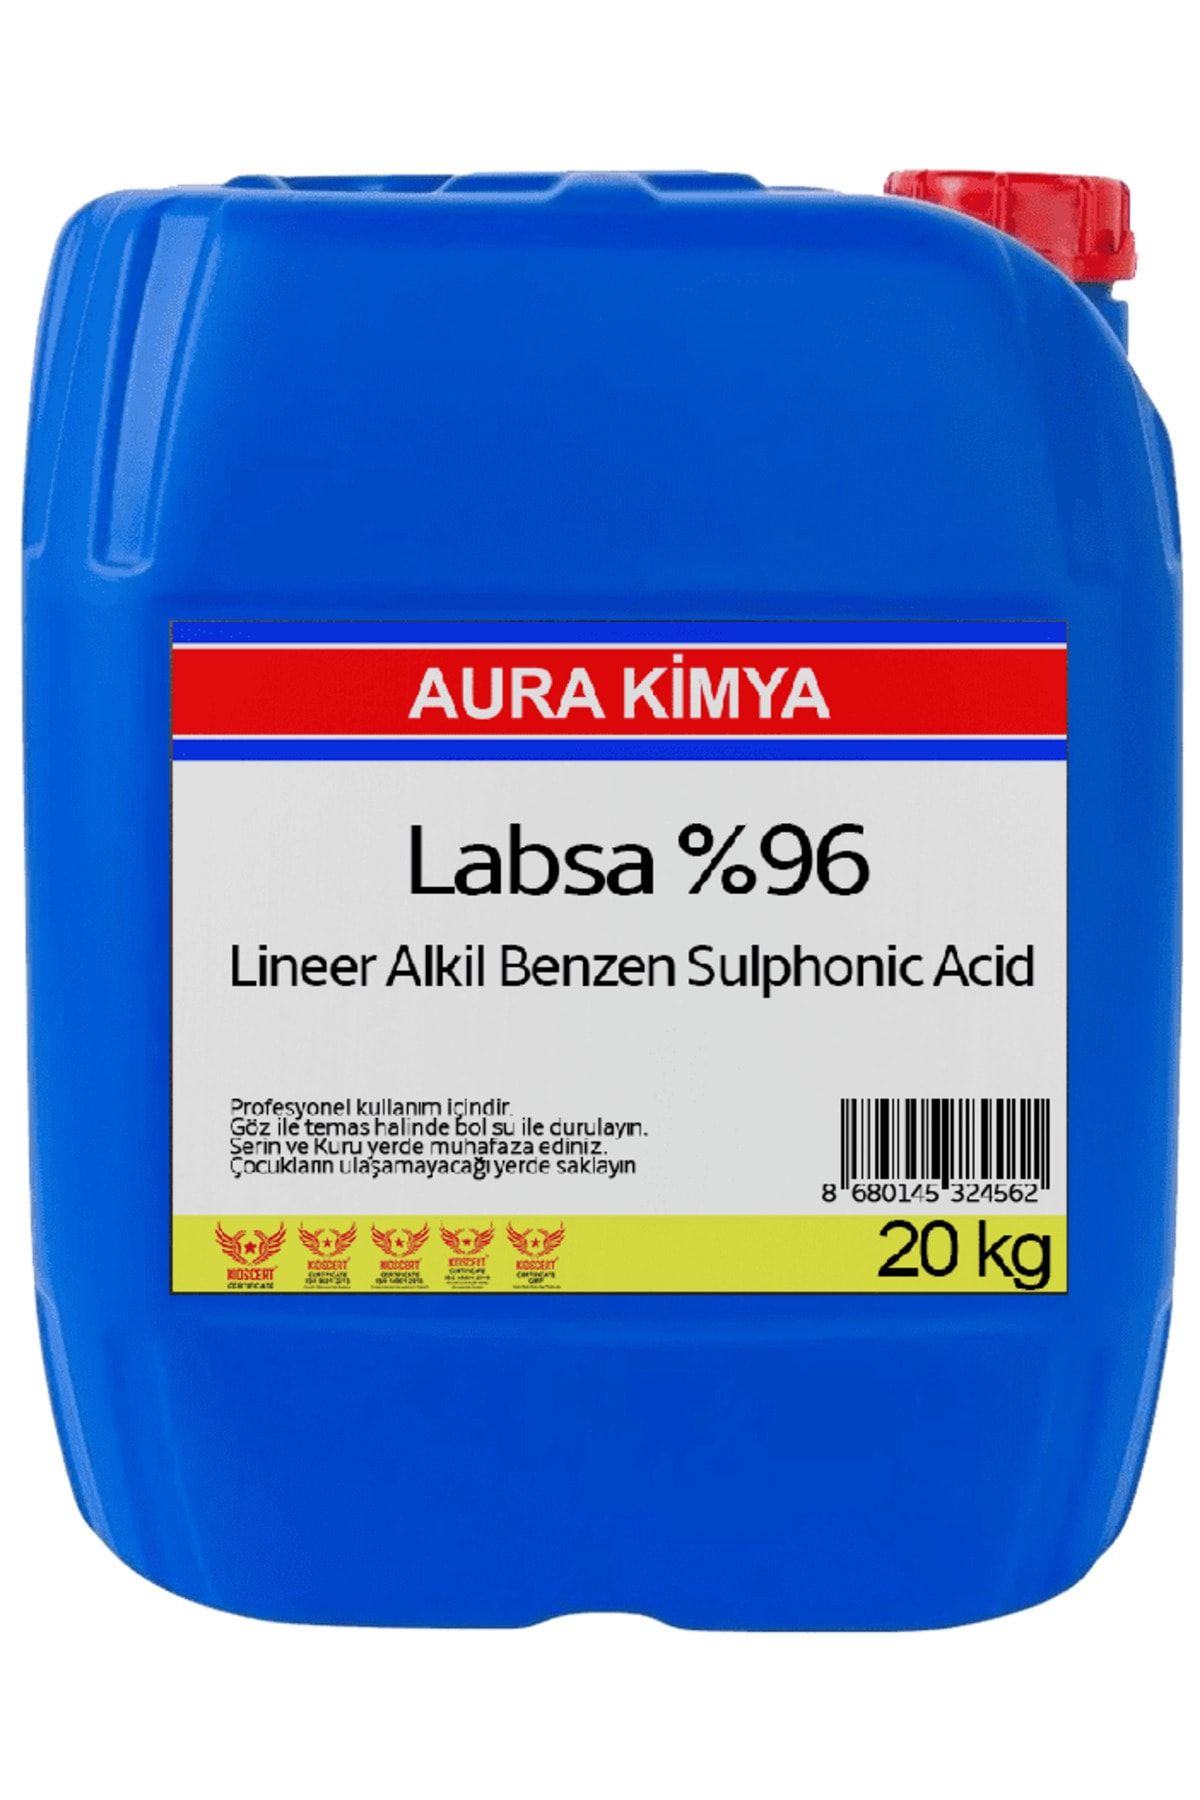 Aura Kimya Labsa %96 Lineer Alkil Benzen Sulphonic Acid 20 Kg